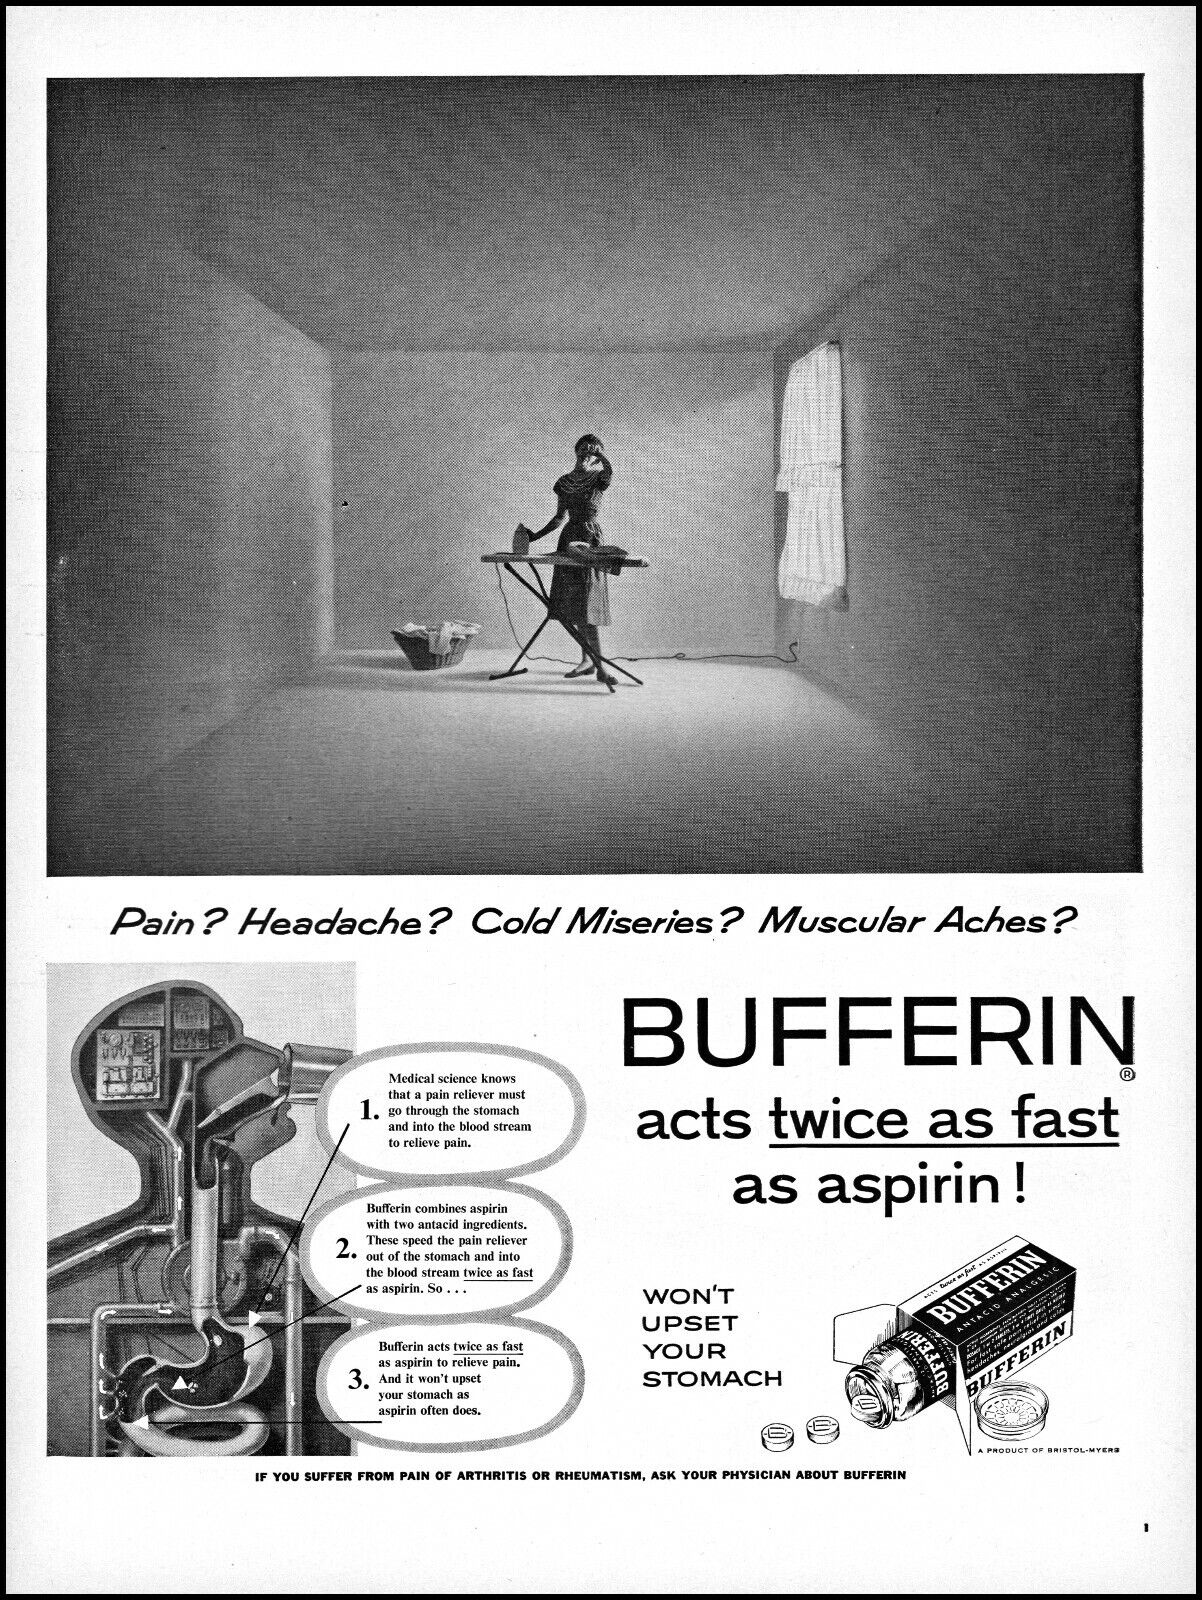 1957 Woman Ironing headache Bufferin pain reliever vintage photo print ad L56